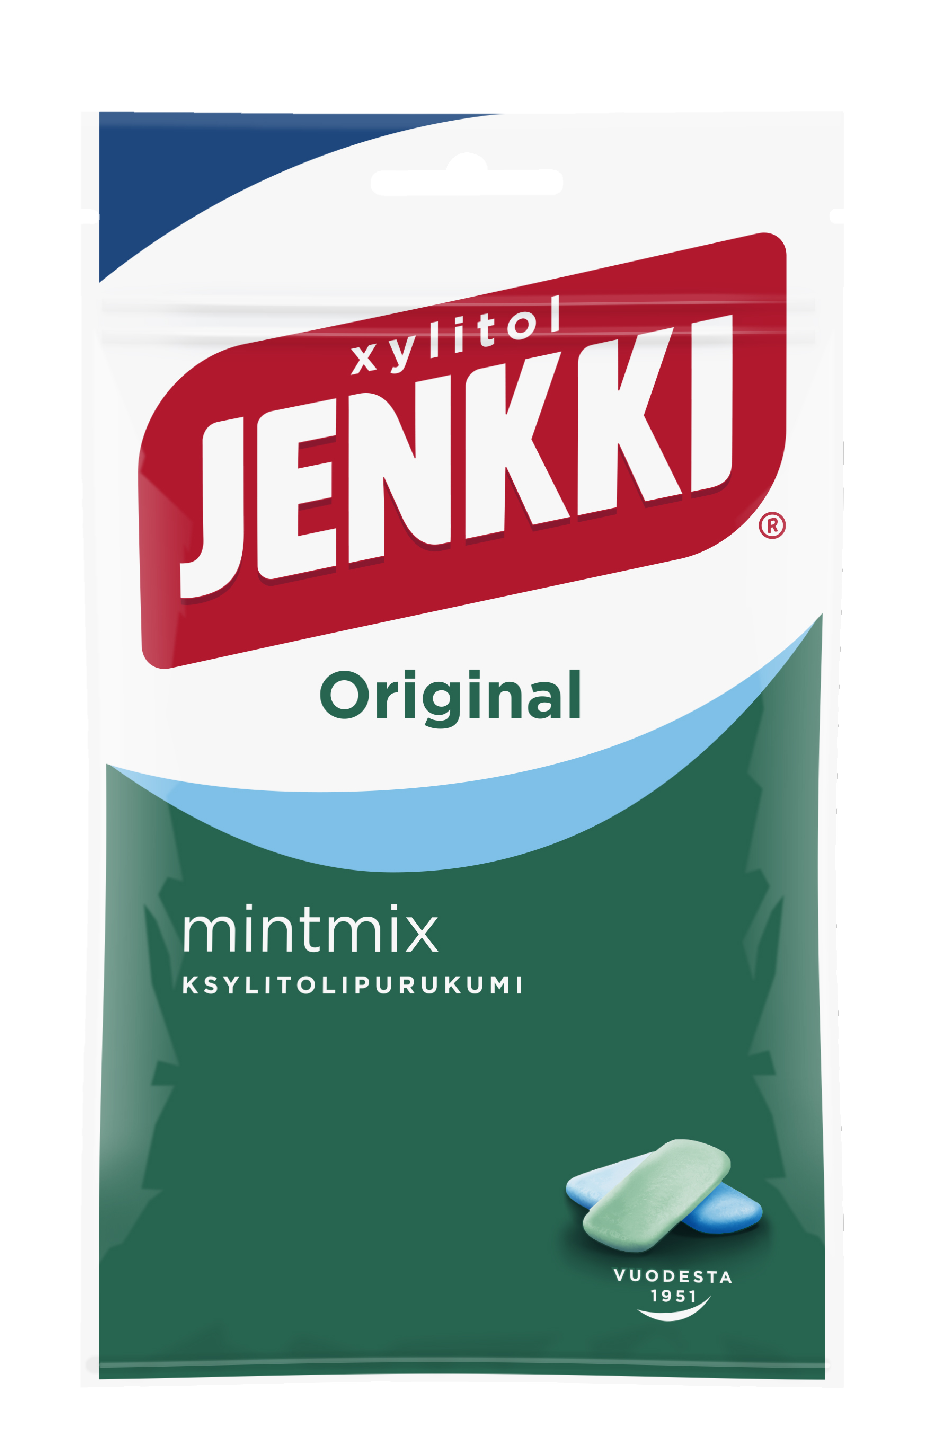 Jenkki Original mint mix ksylitolipurukumi 100g